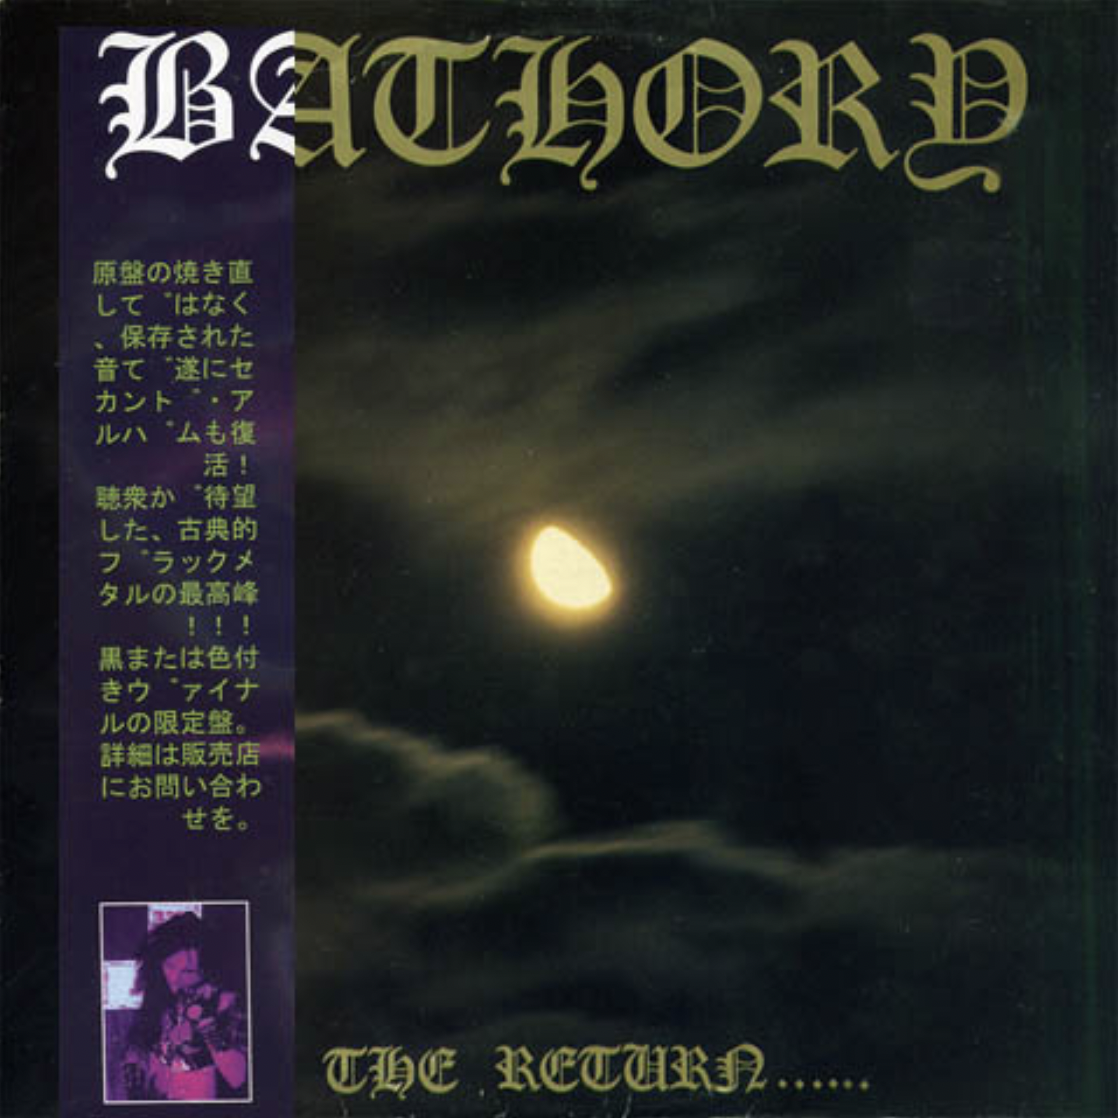 Bathory - The Return.... LP (Gold vinyl)